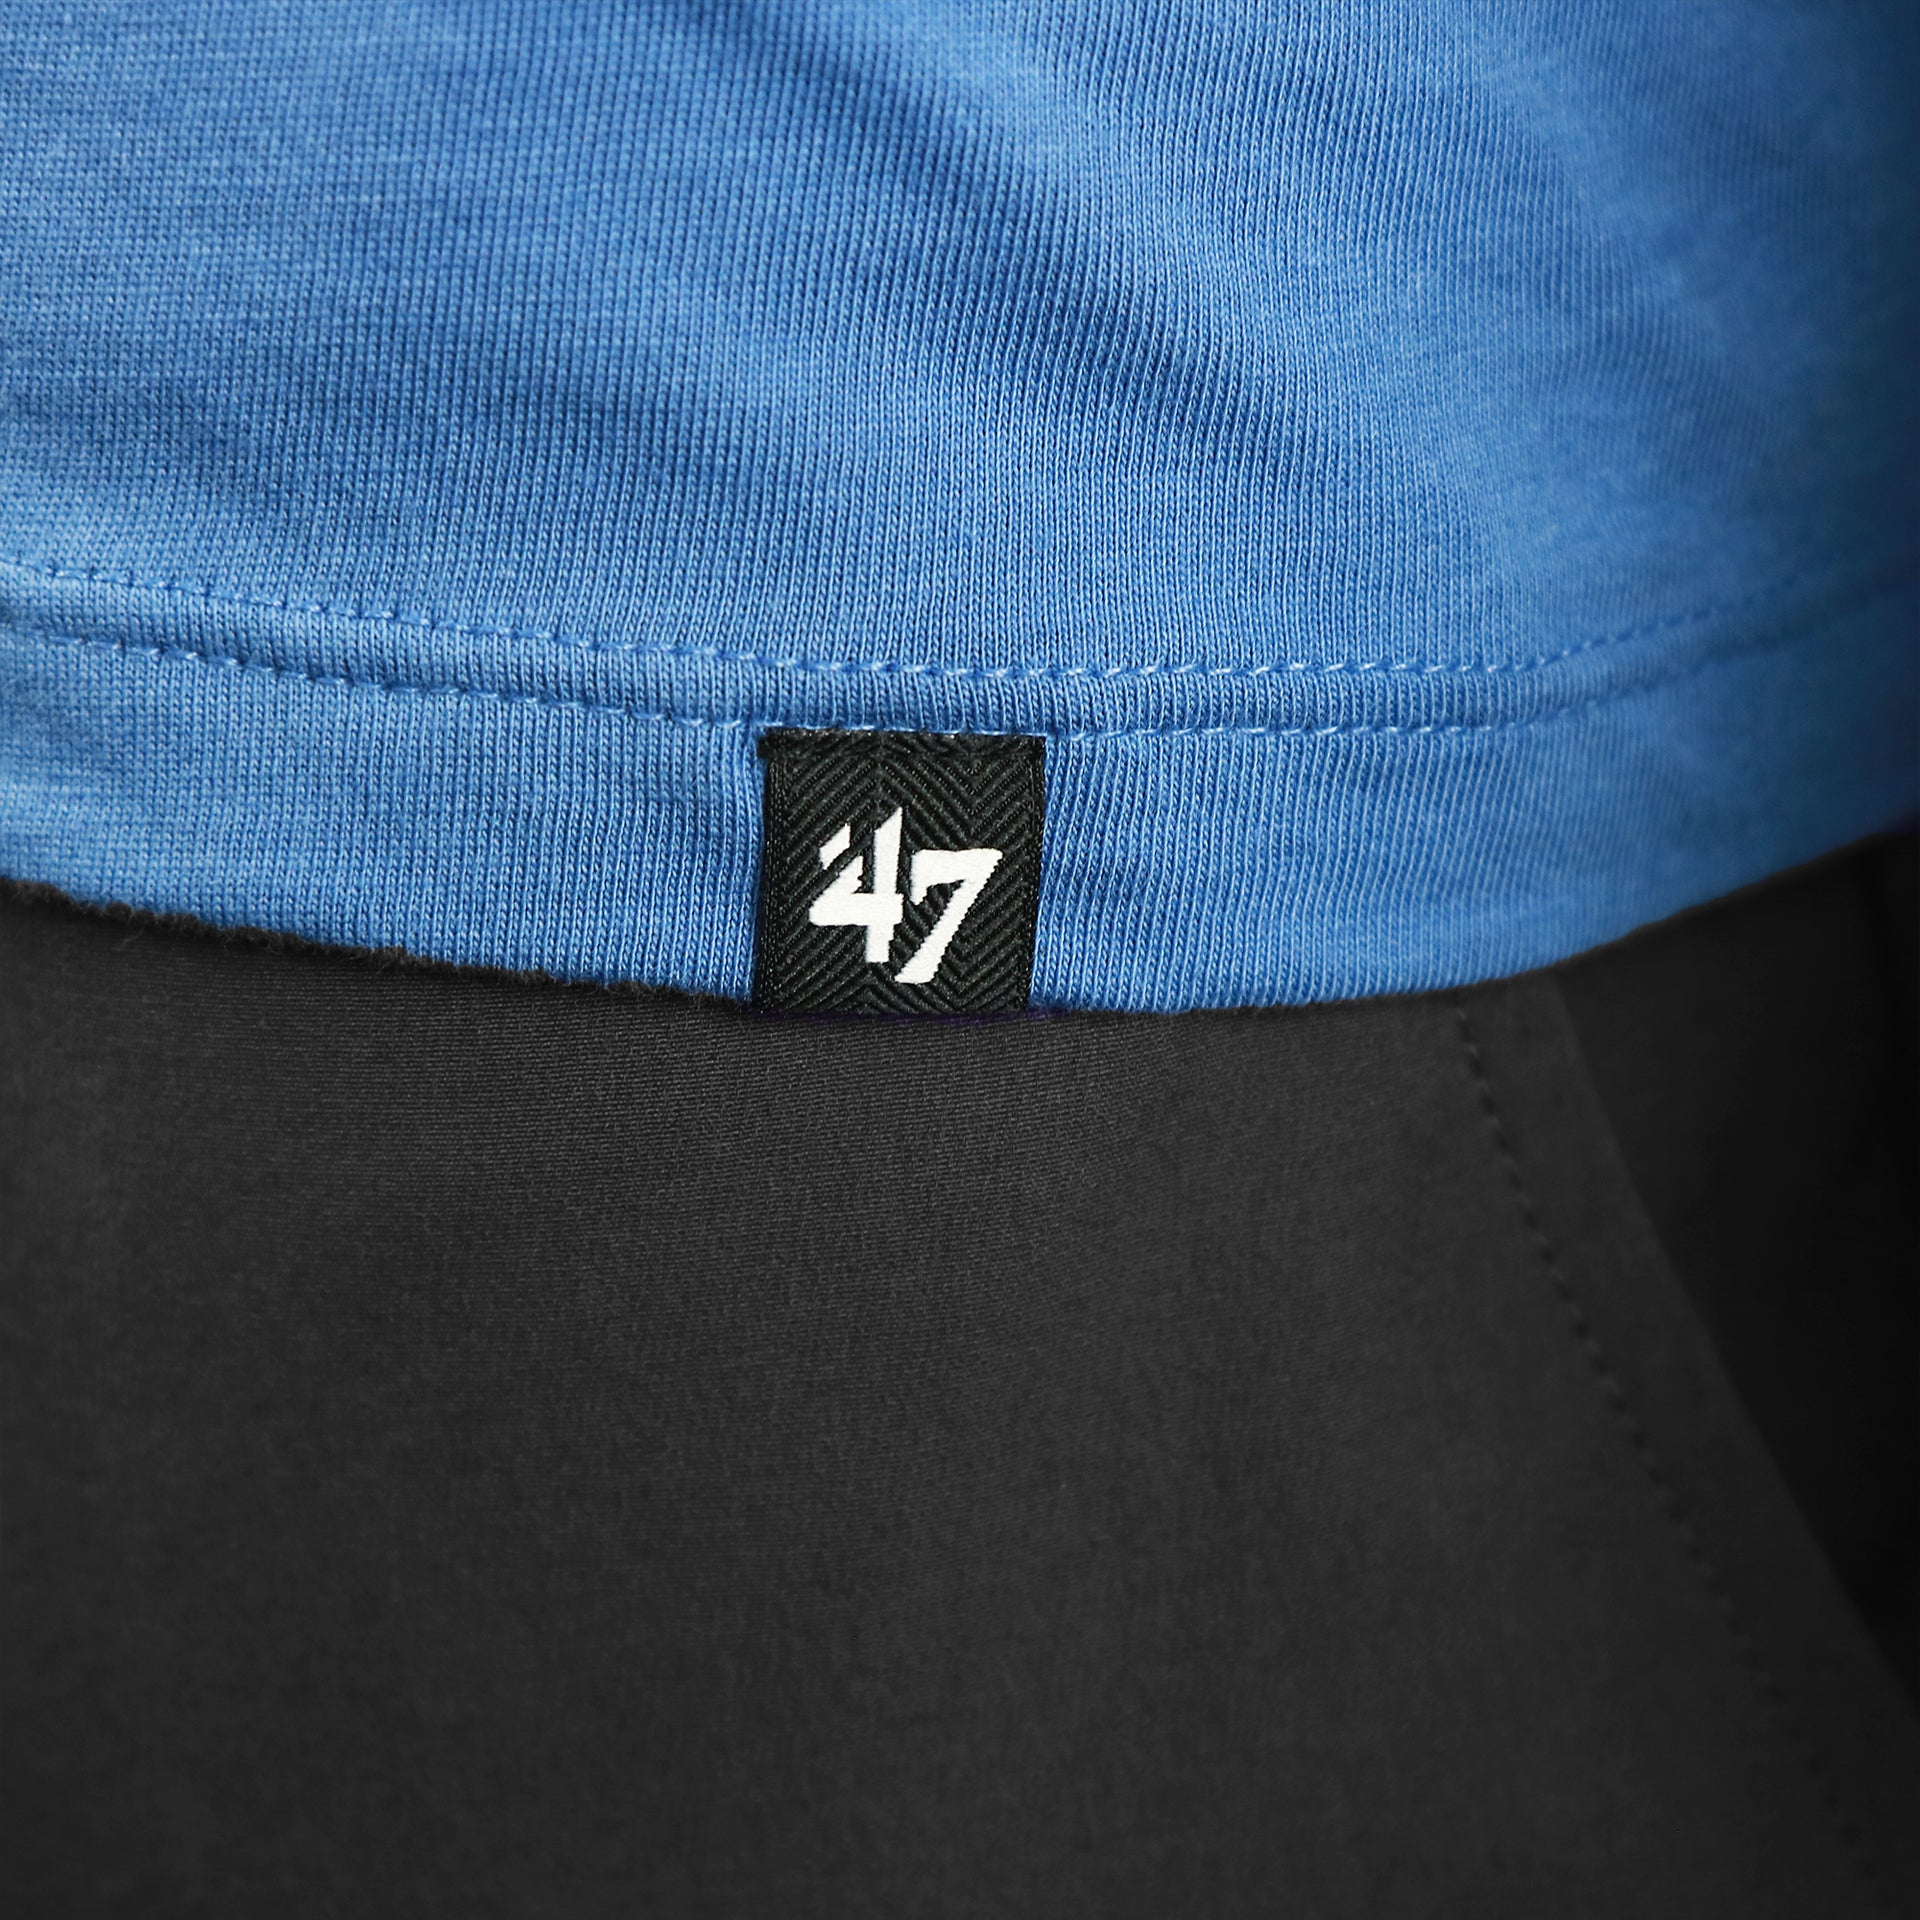 The 47 Brand Tag on the New York Giants Premier Franklin Worn Printed Giants Logo Tshirt | Cadet Blue Tshirt